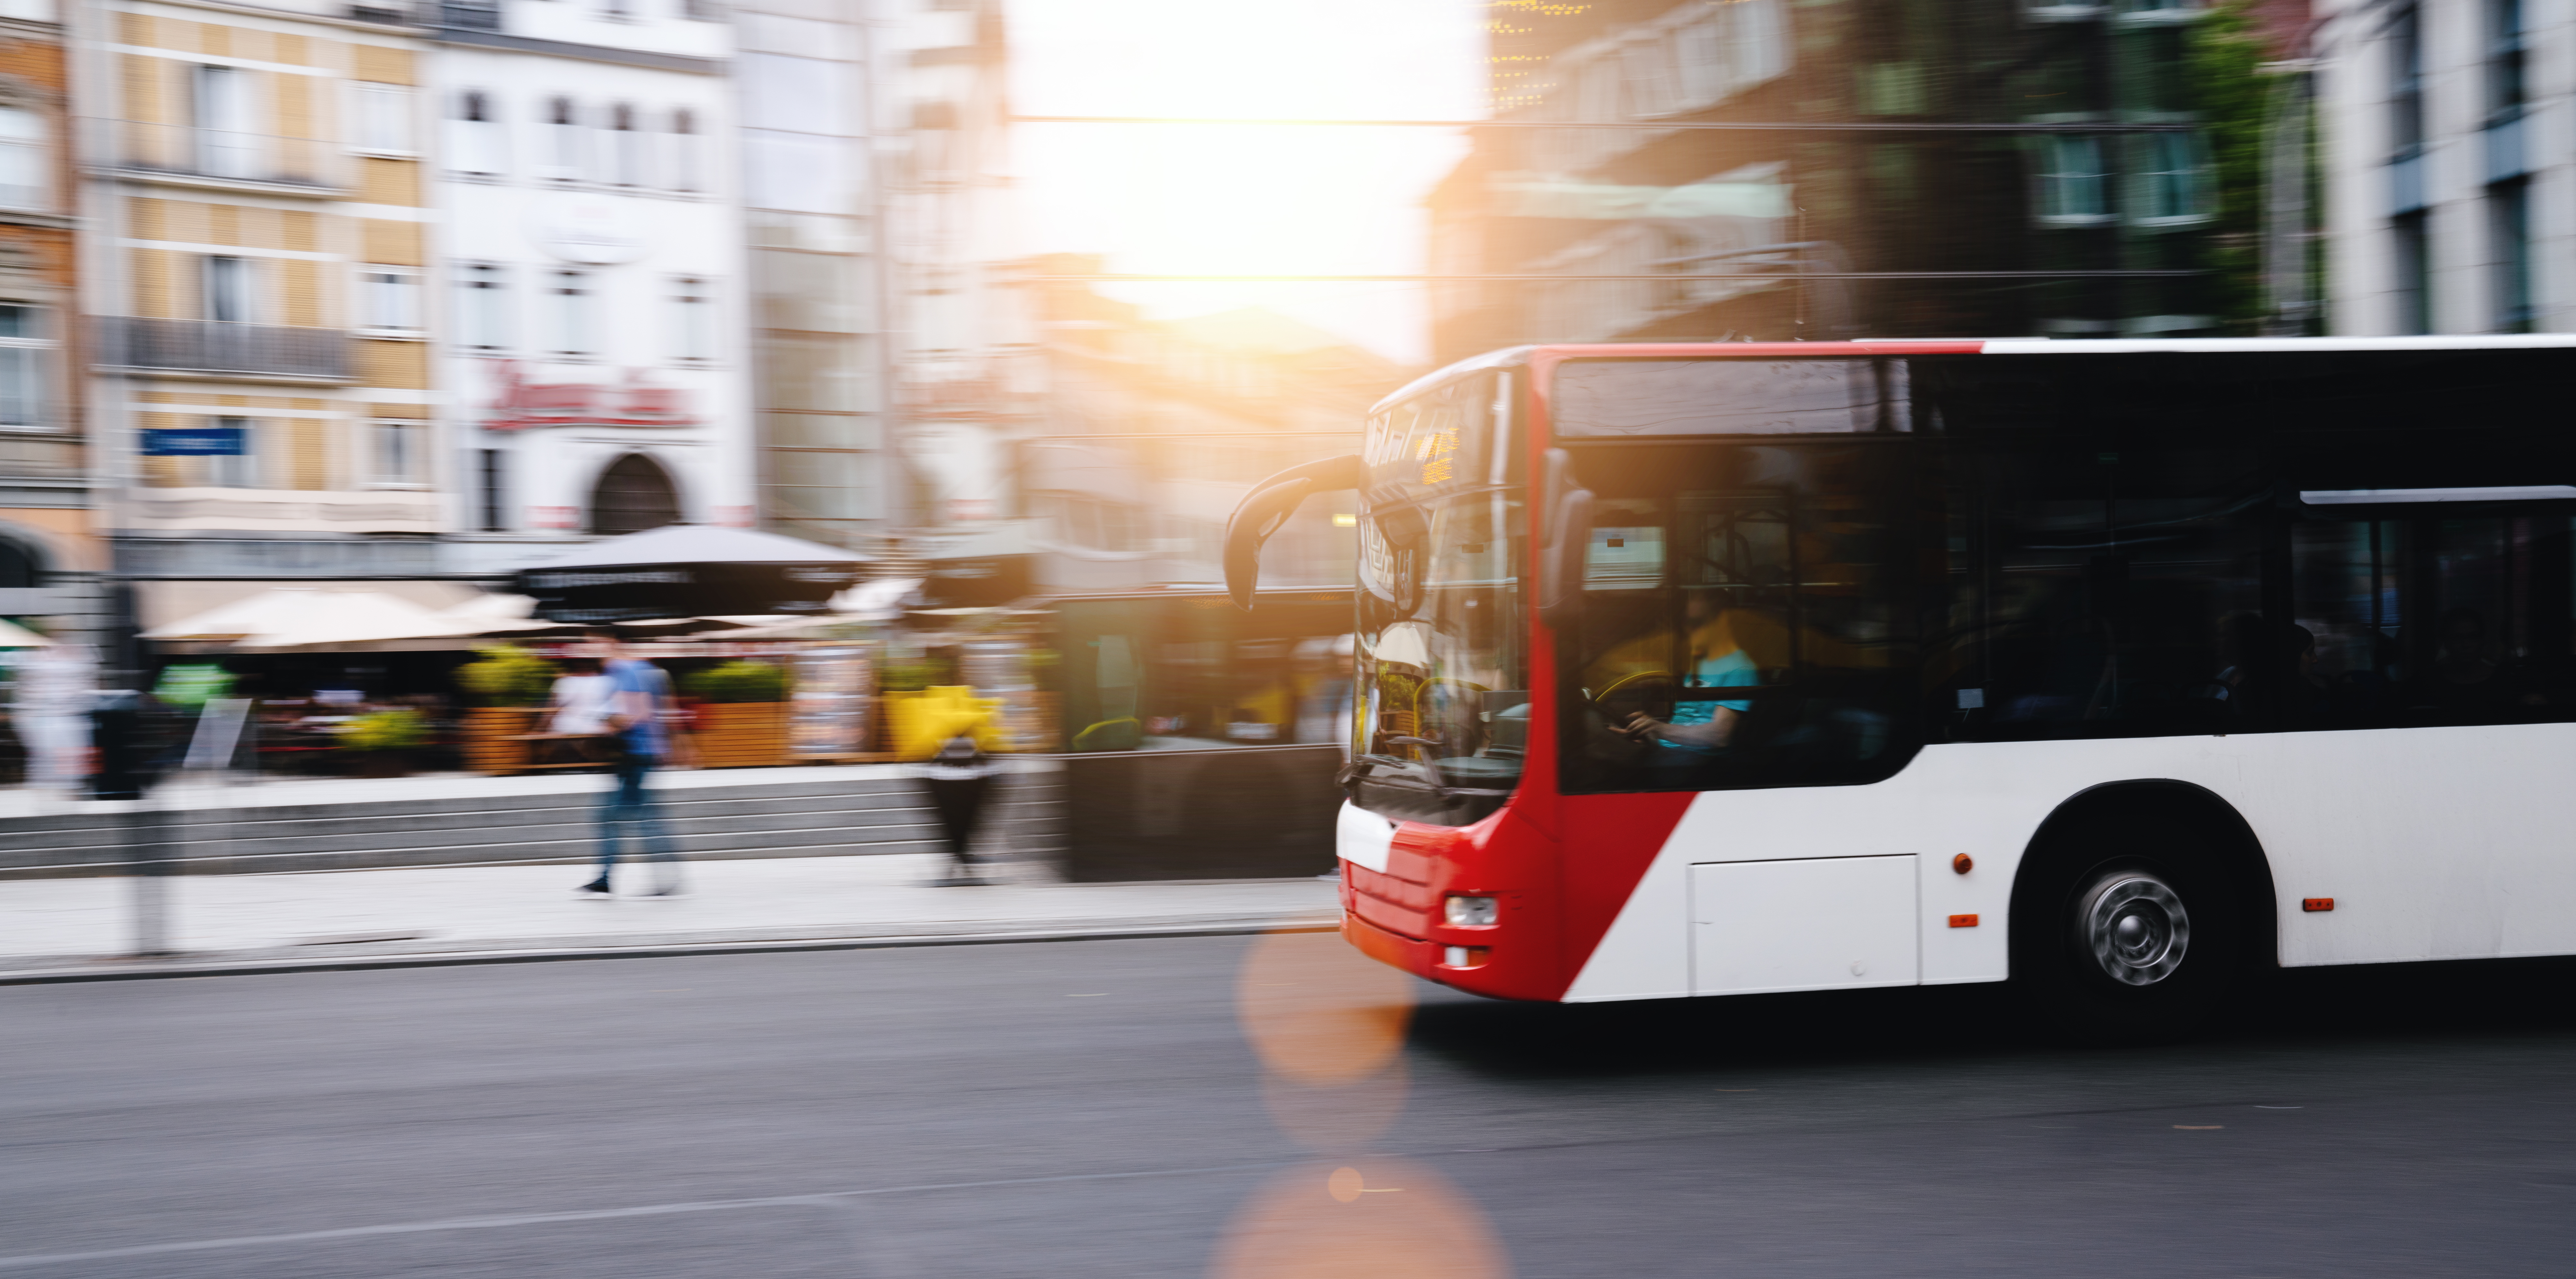 Endego: A revolutionary approach to bus design